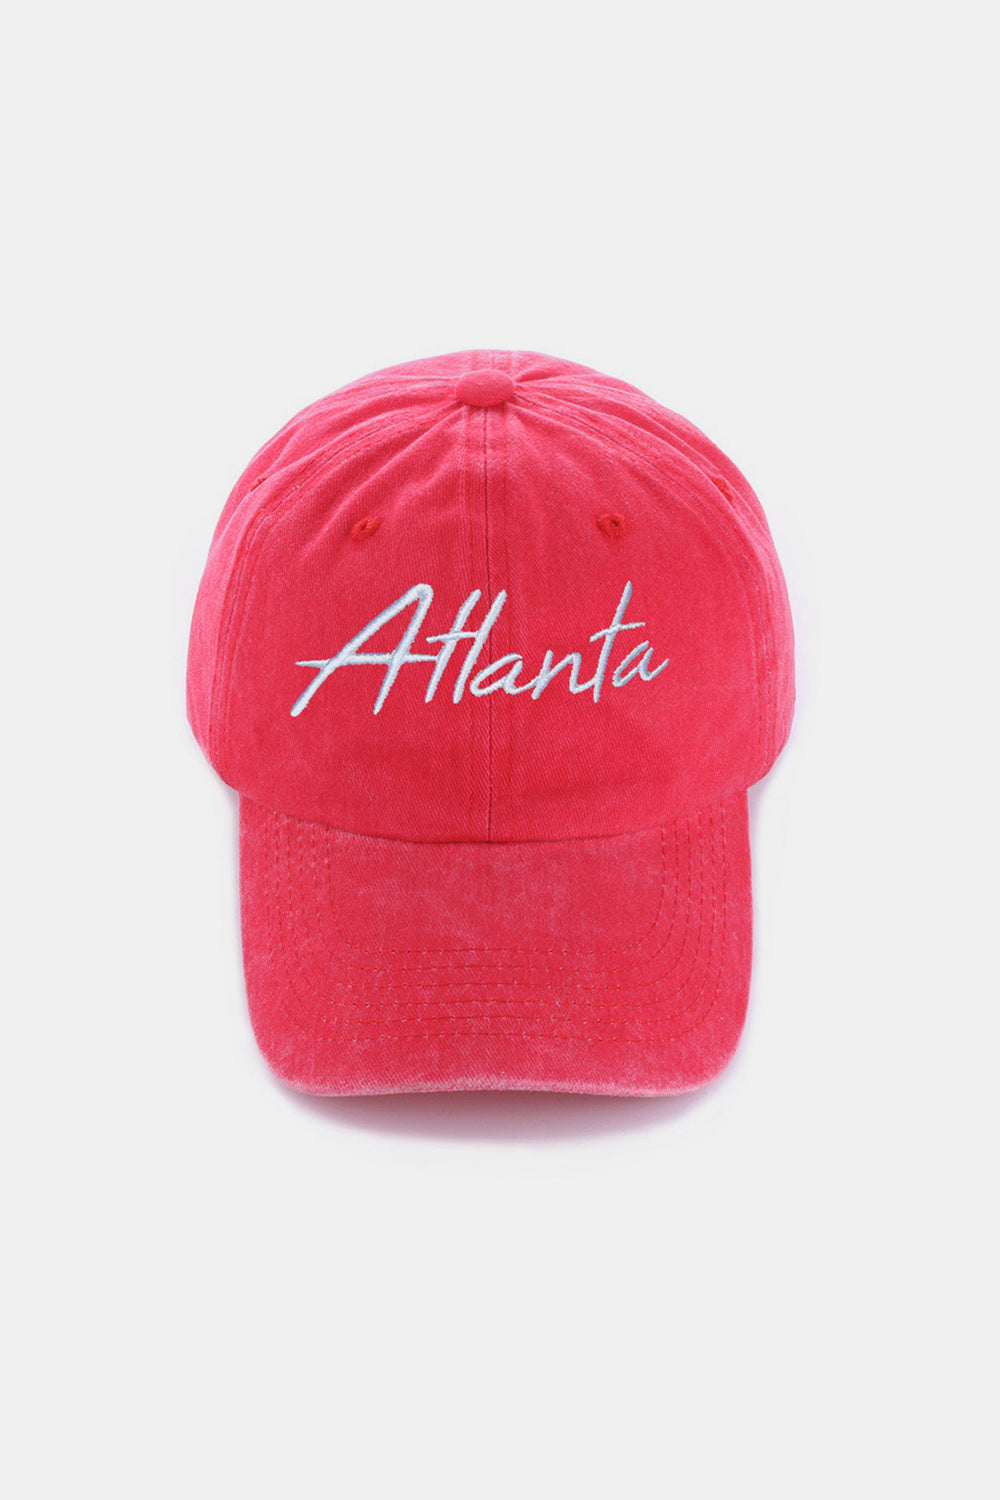 ATLANTA Embroidered Baseball Cap